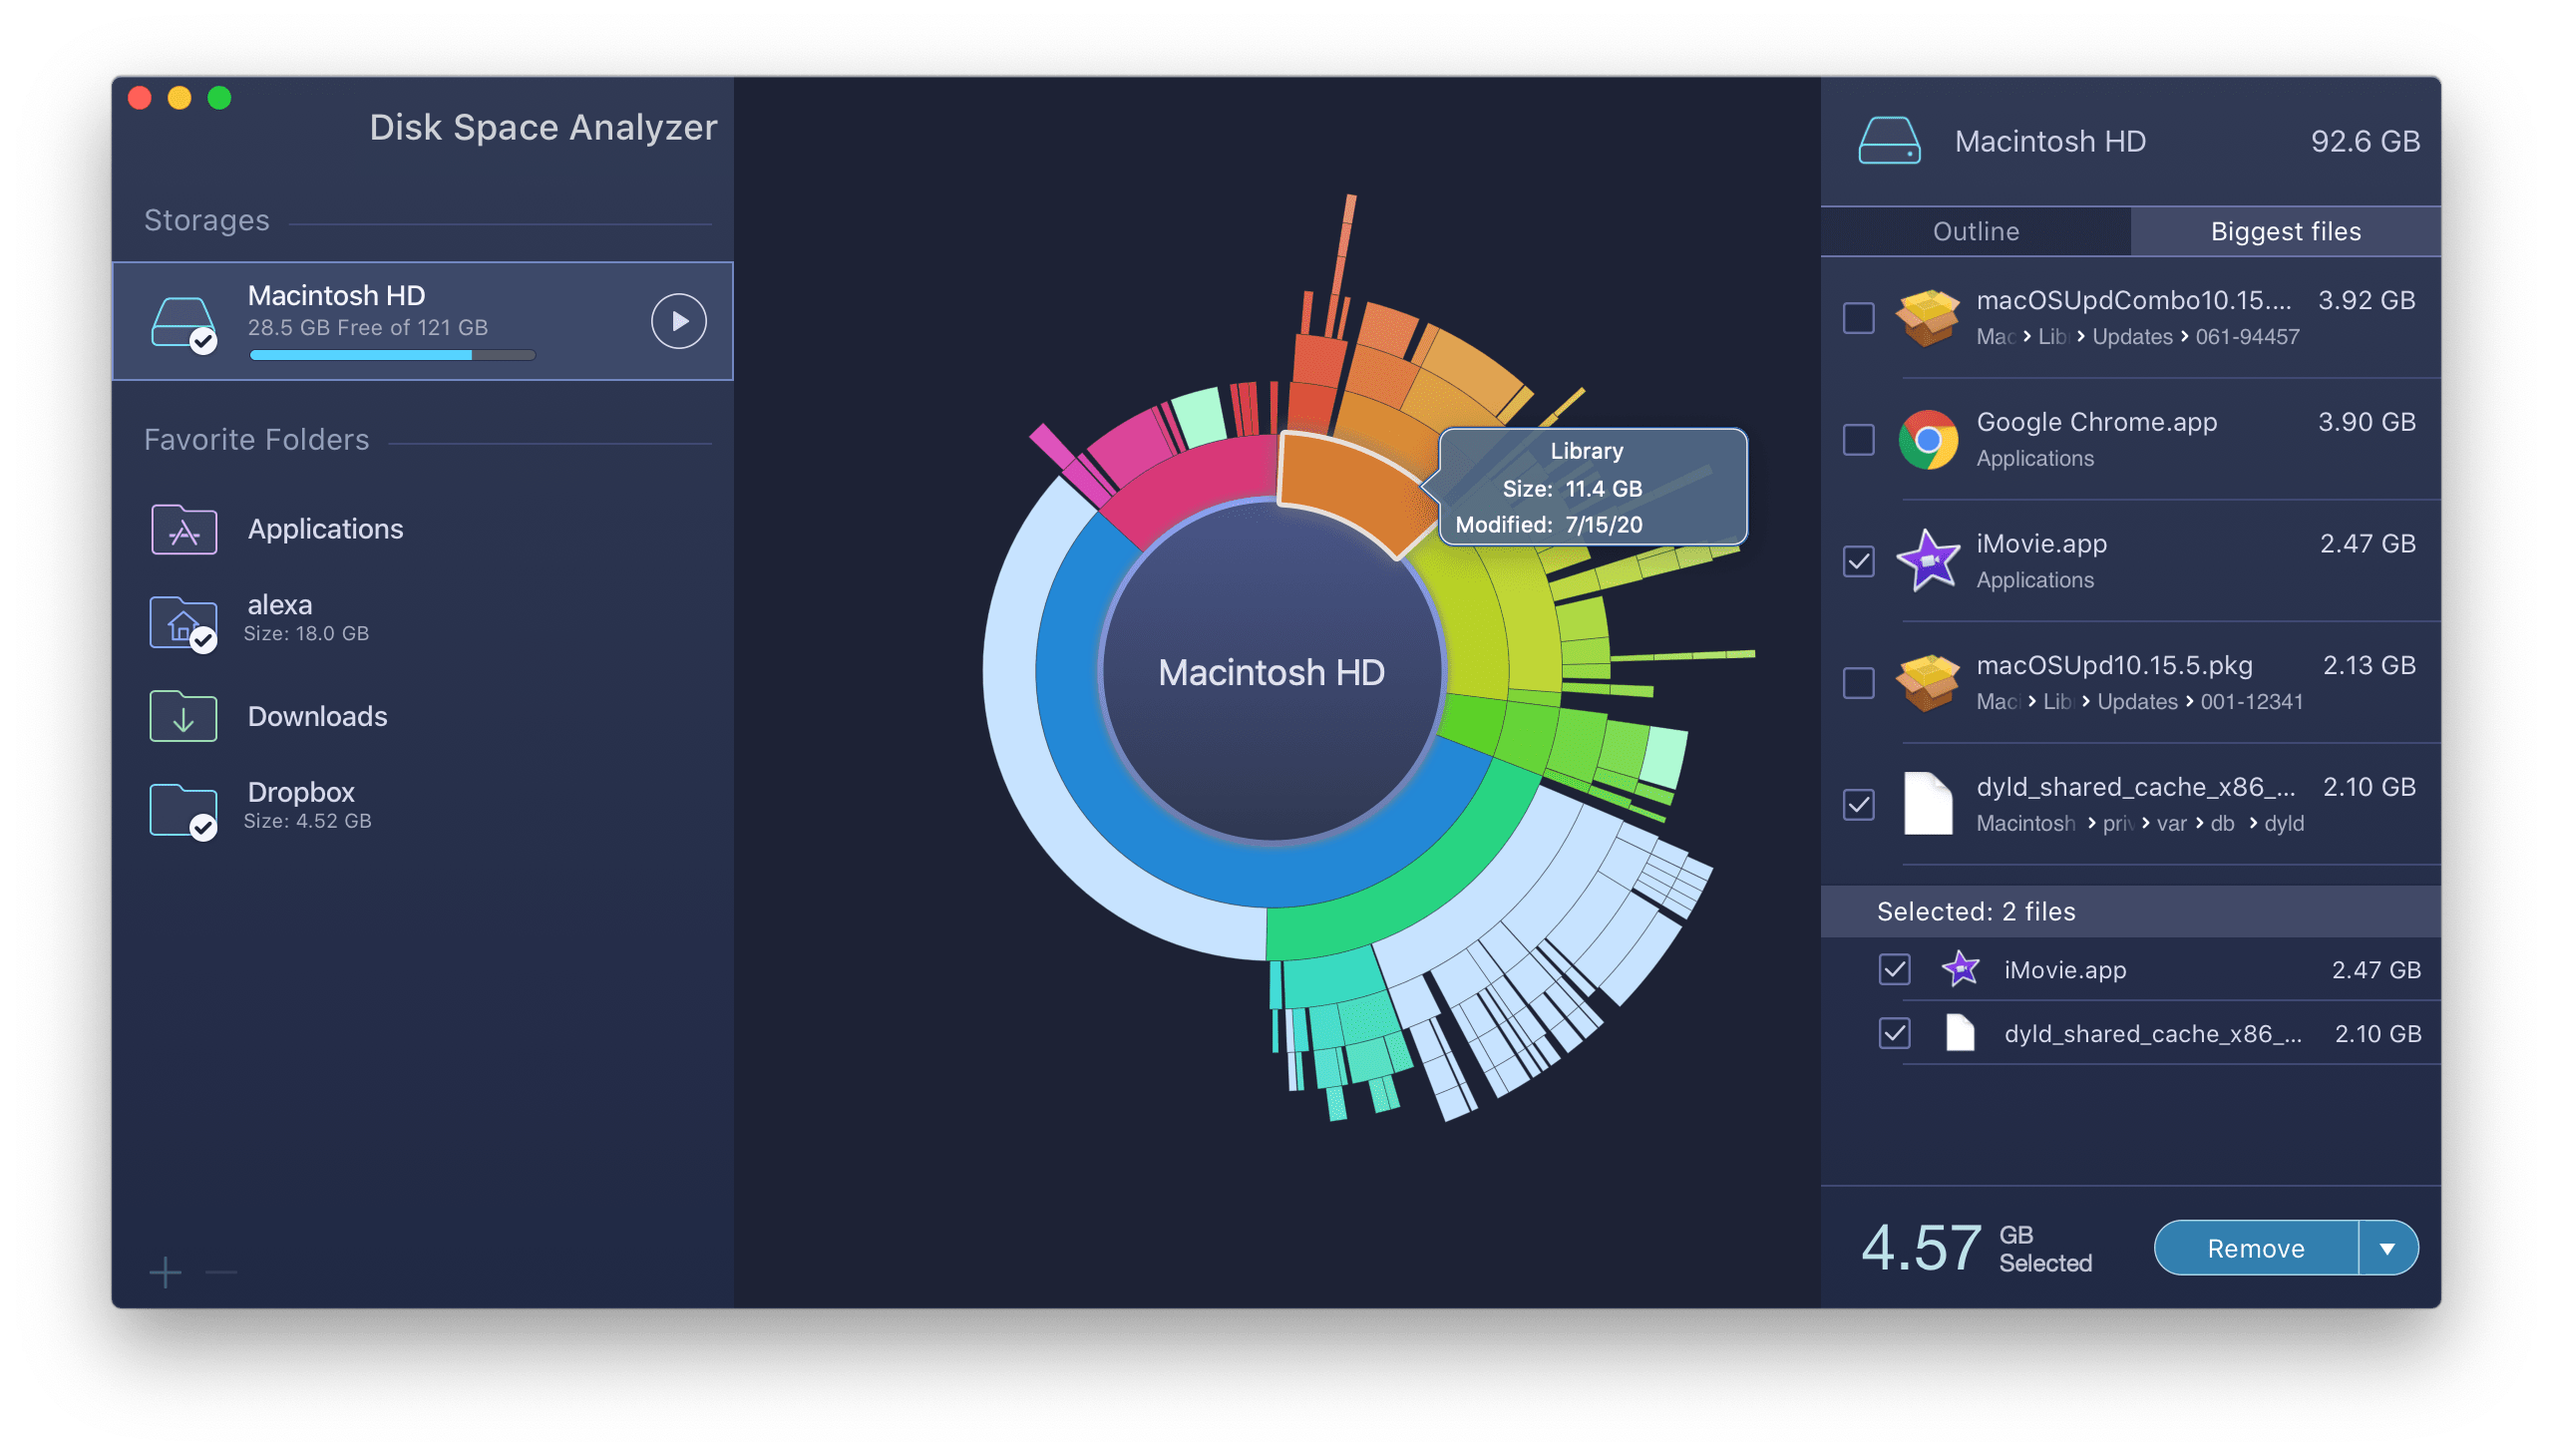 disk space analyzer tool in mac cleaner app